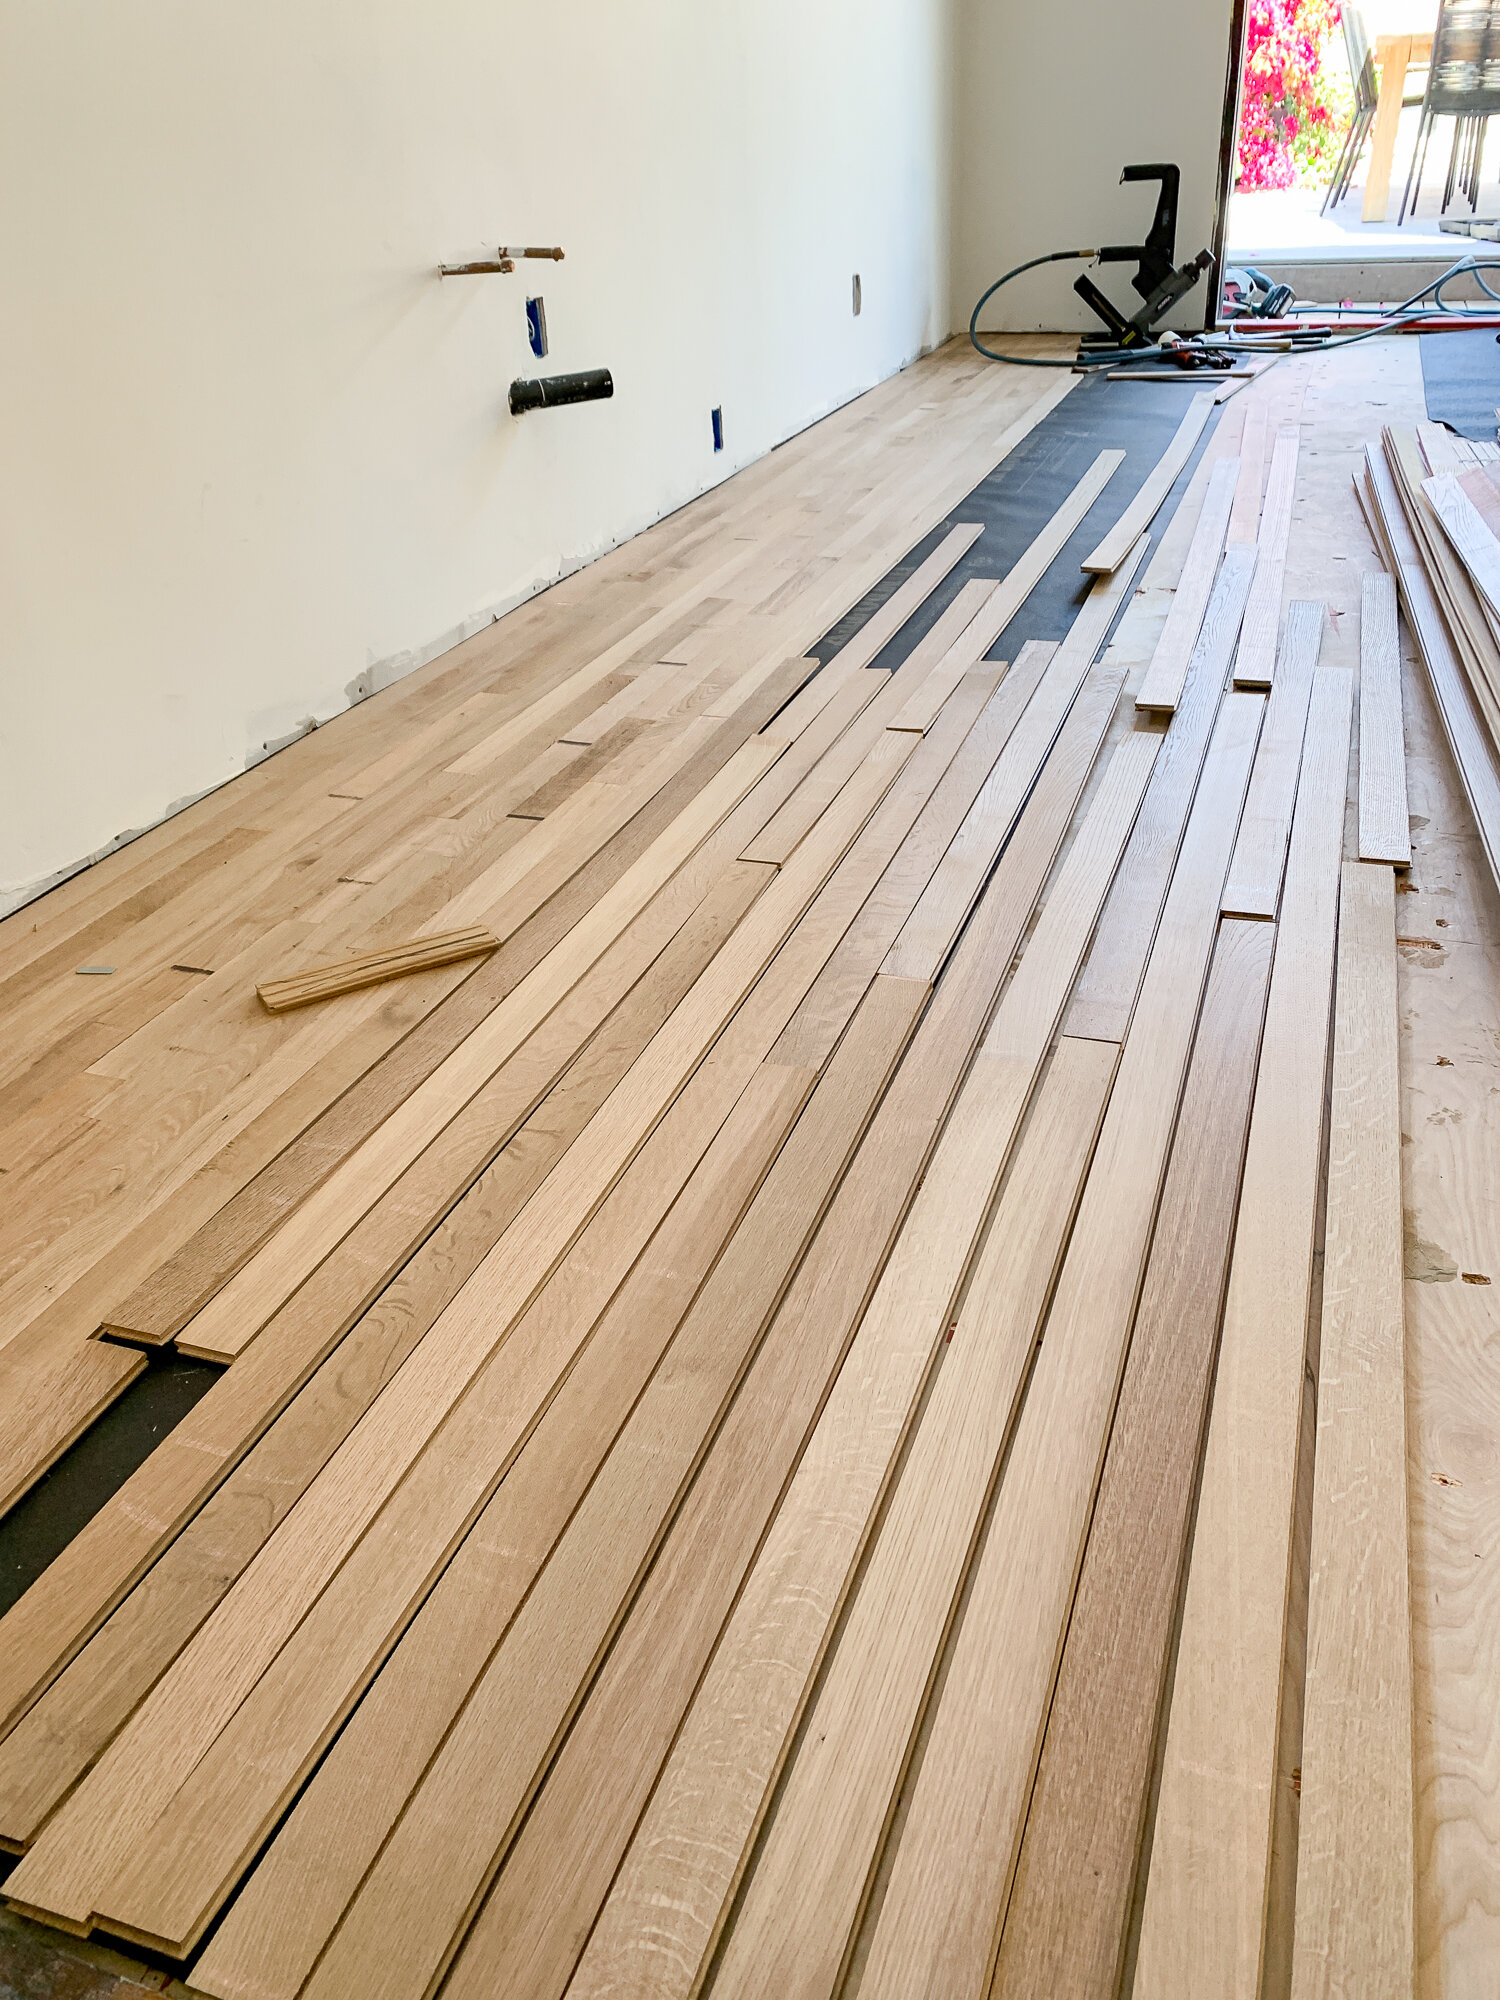 Installing New Hardwood Floors In Our, Installing Solid Hardwood Floors